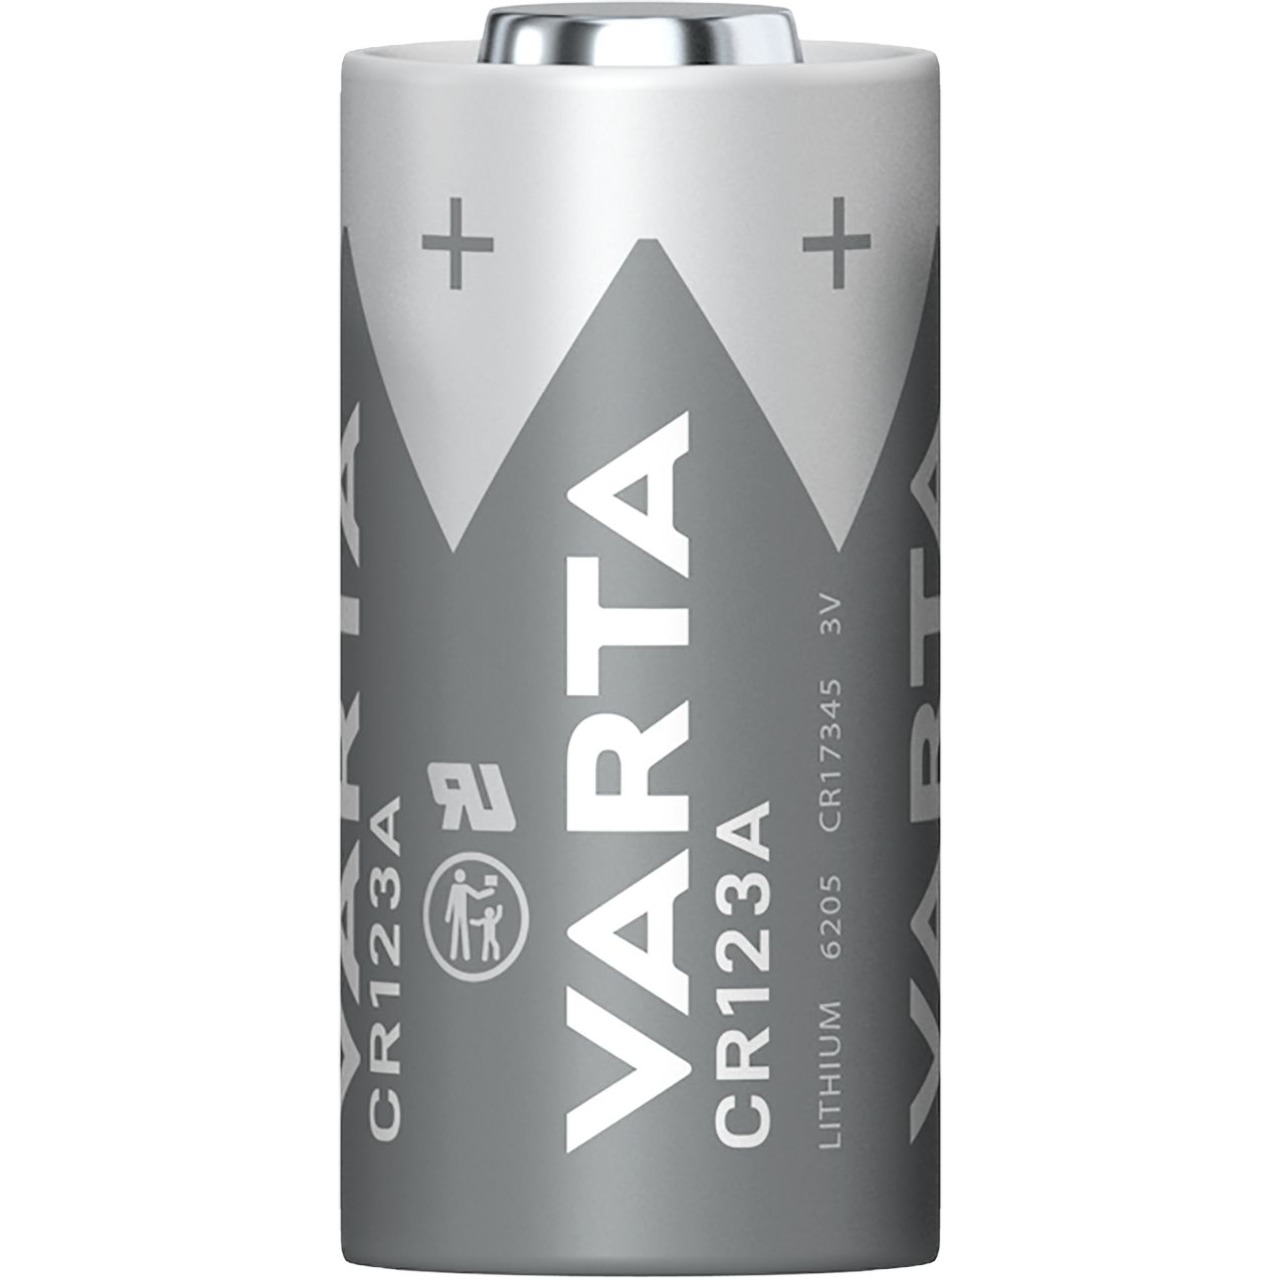 VARTA Lithium Batterie CR123A- 1600 mAh- 3 V